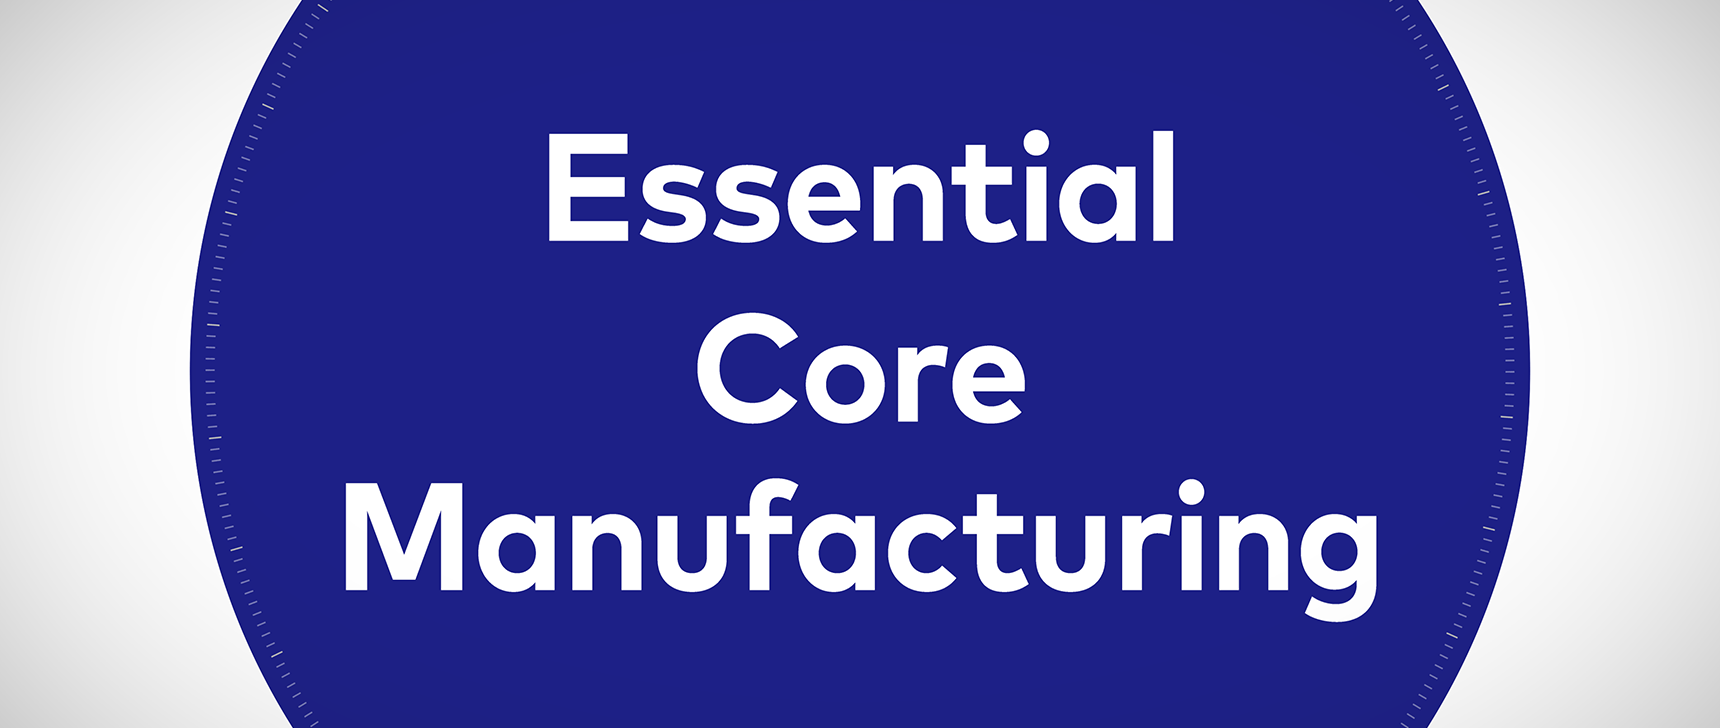 Essential Core Manufacturing